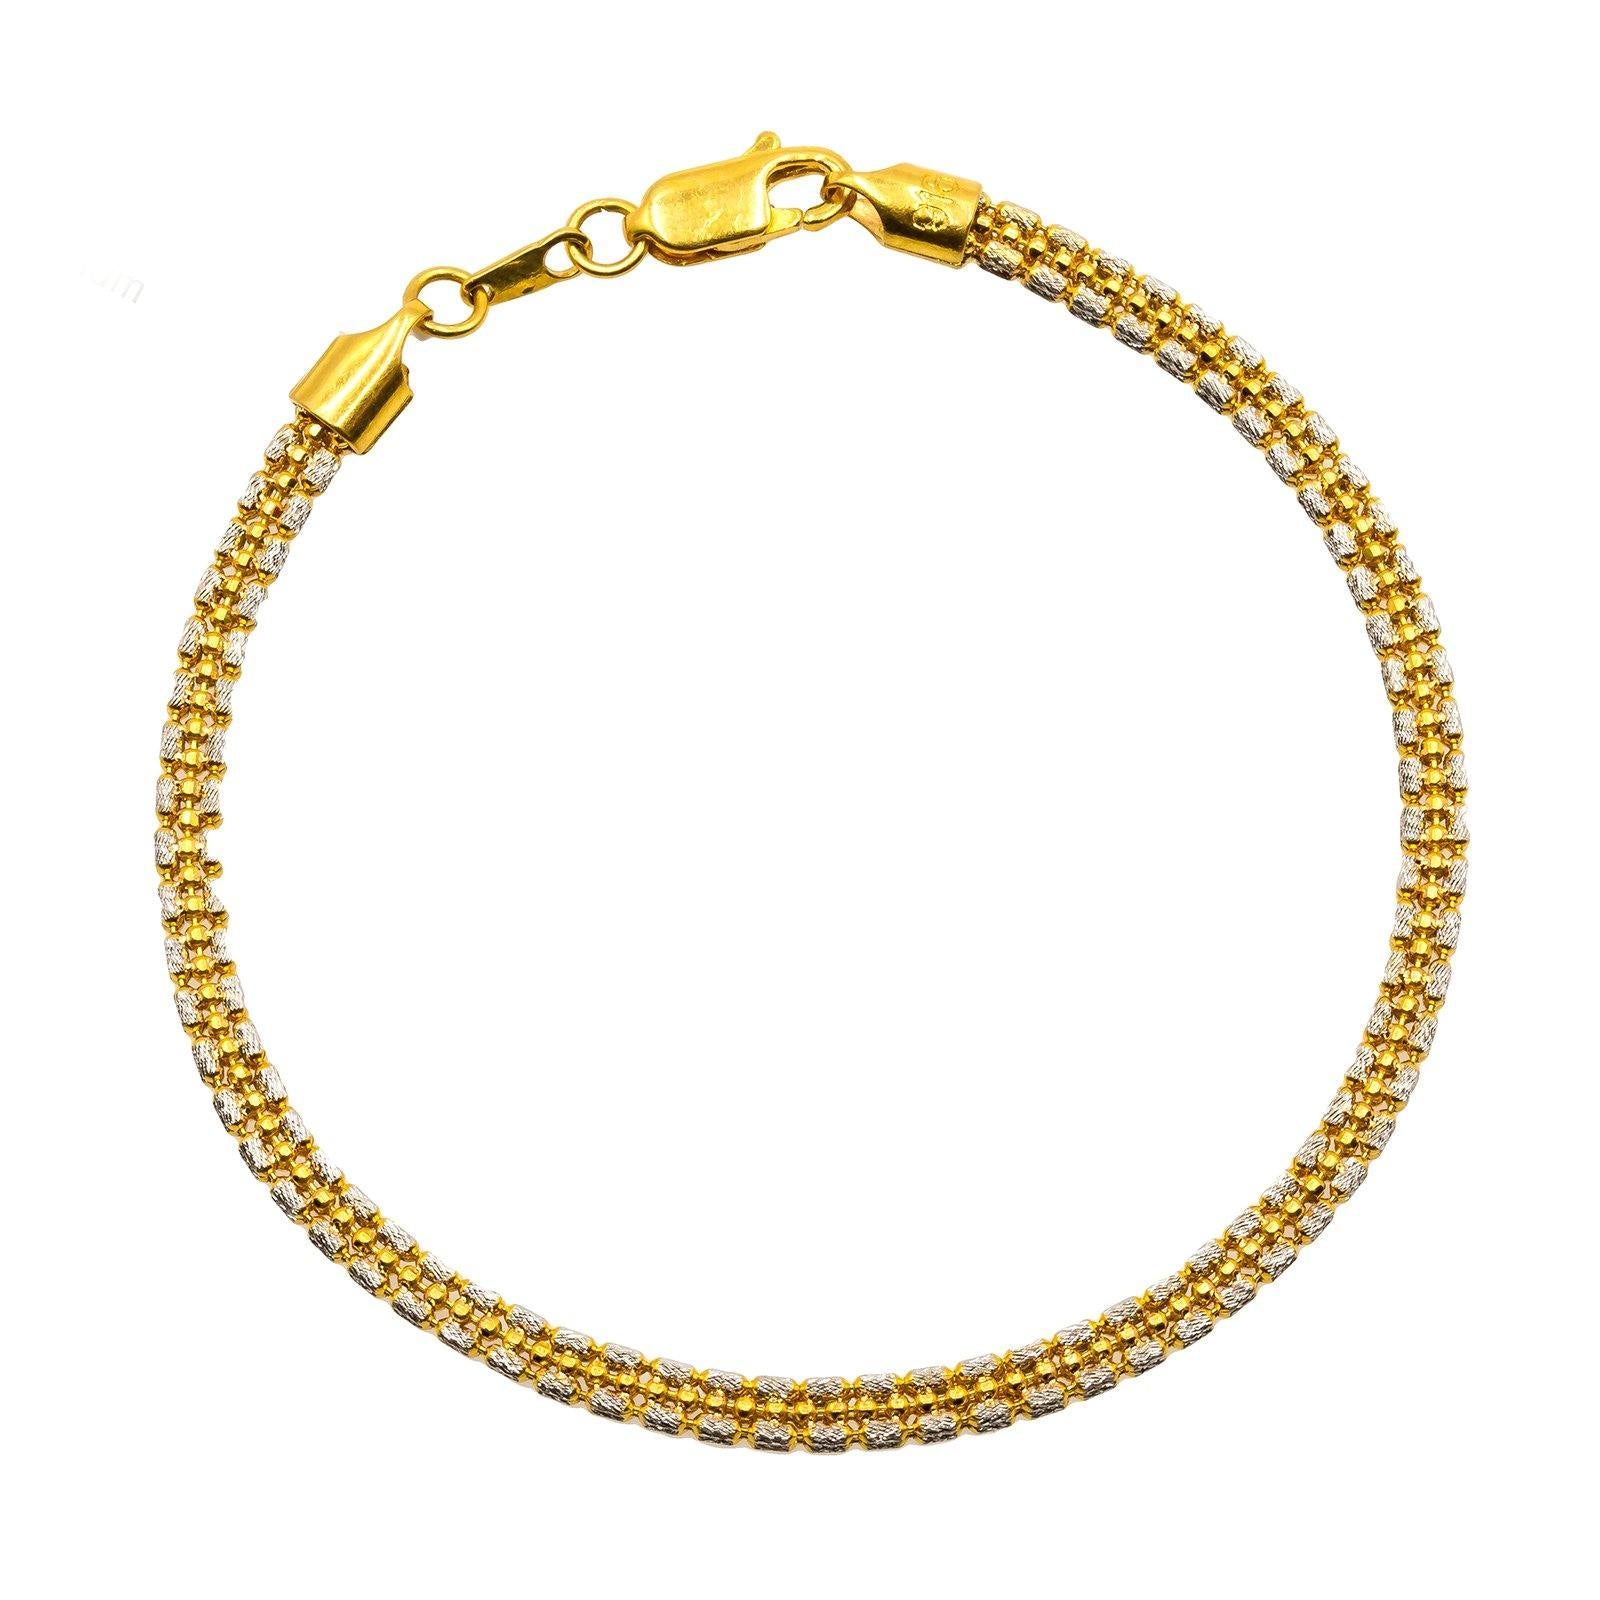 22K Gold Cuff for Men - Bracelet - 235-GBR1950 in 57.050 Grams